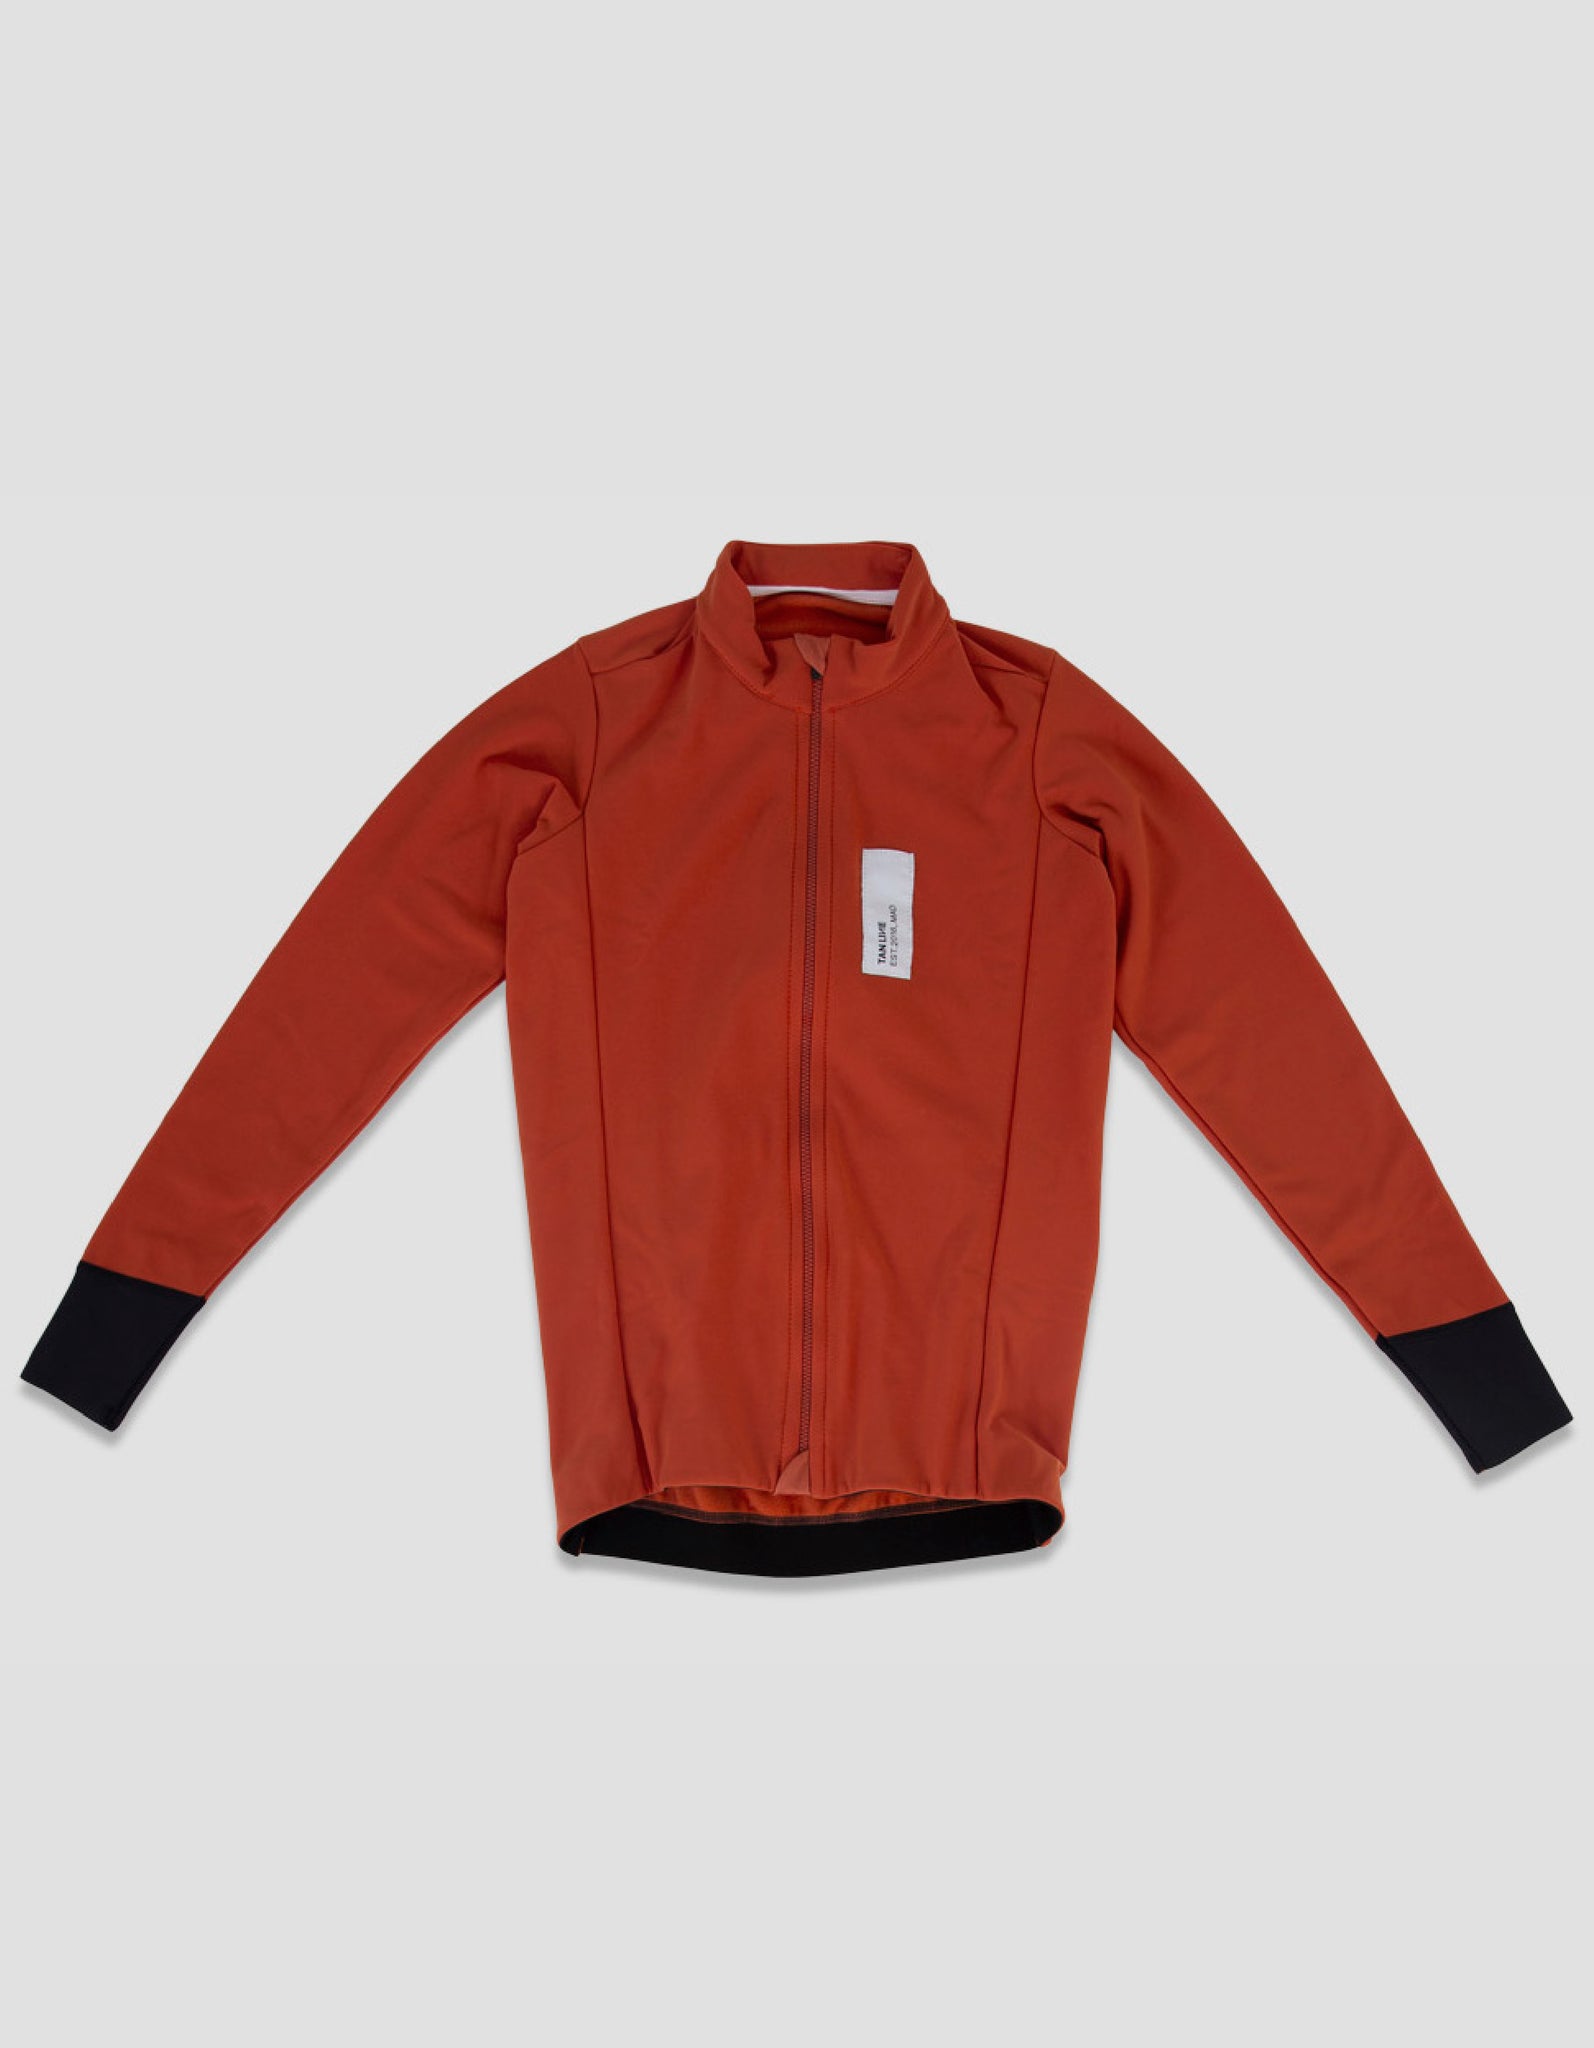 Pass Jacket ~ Rust Orange